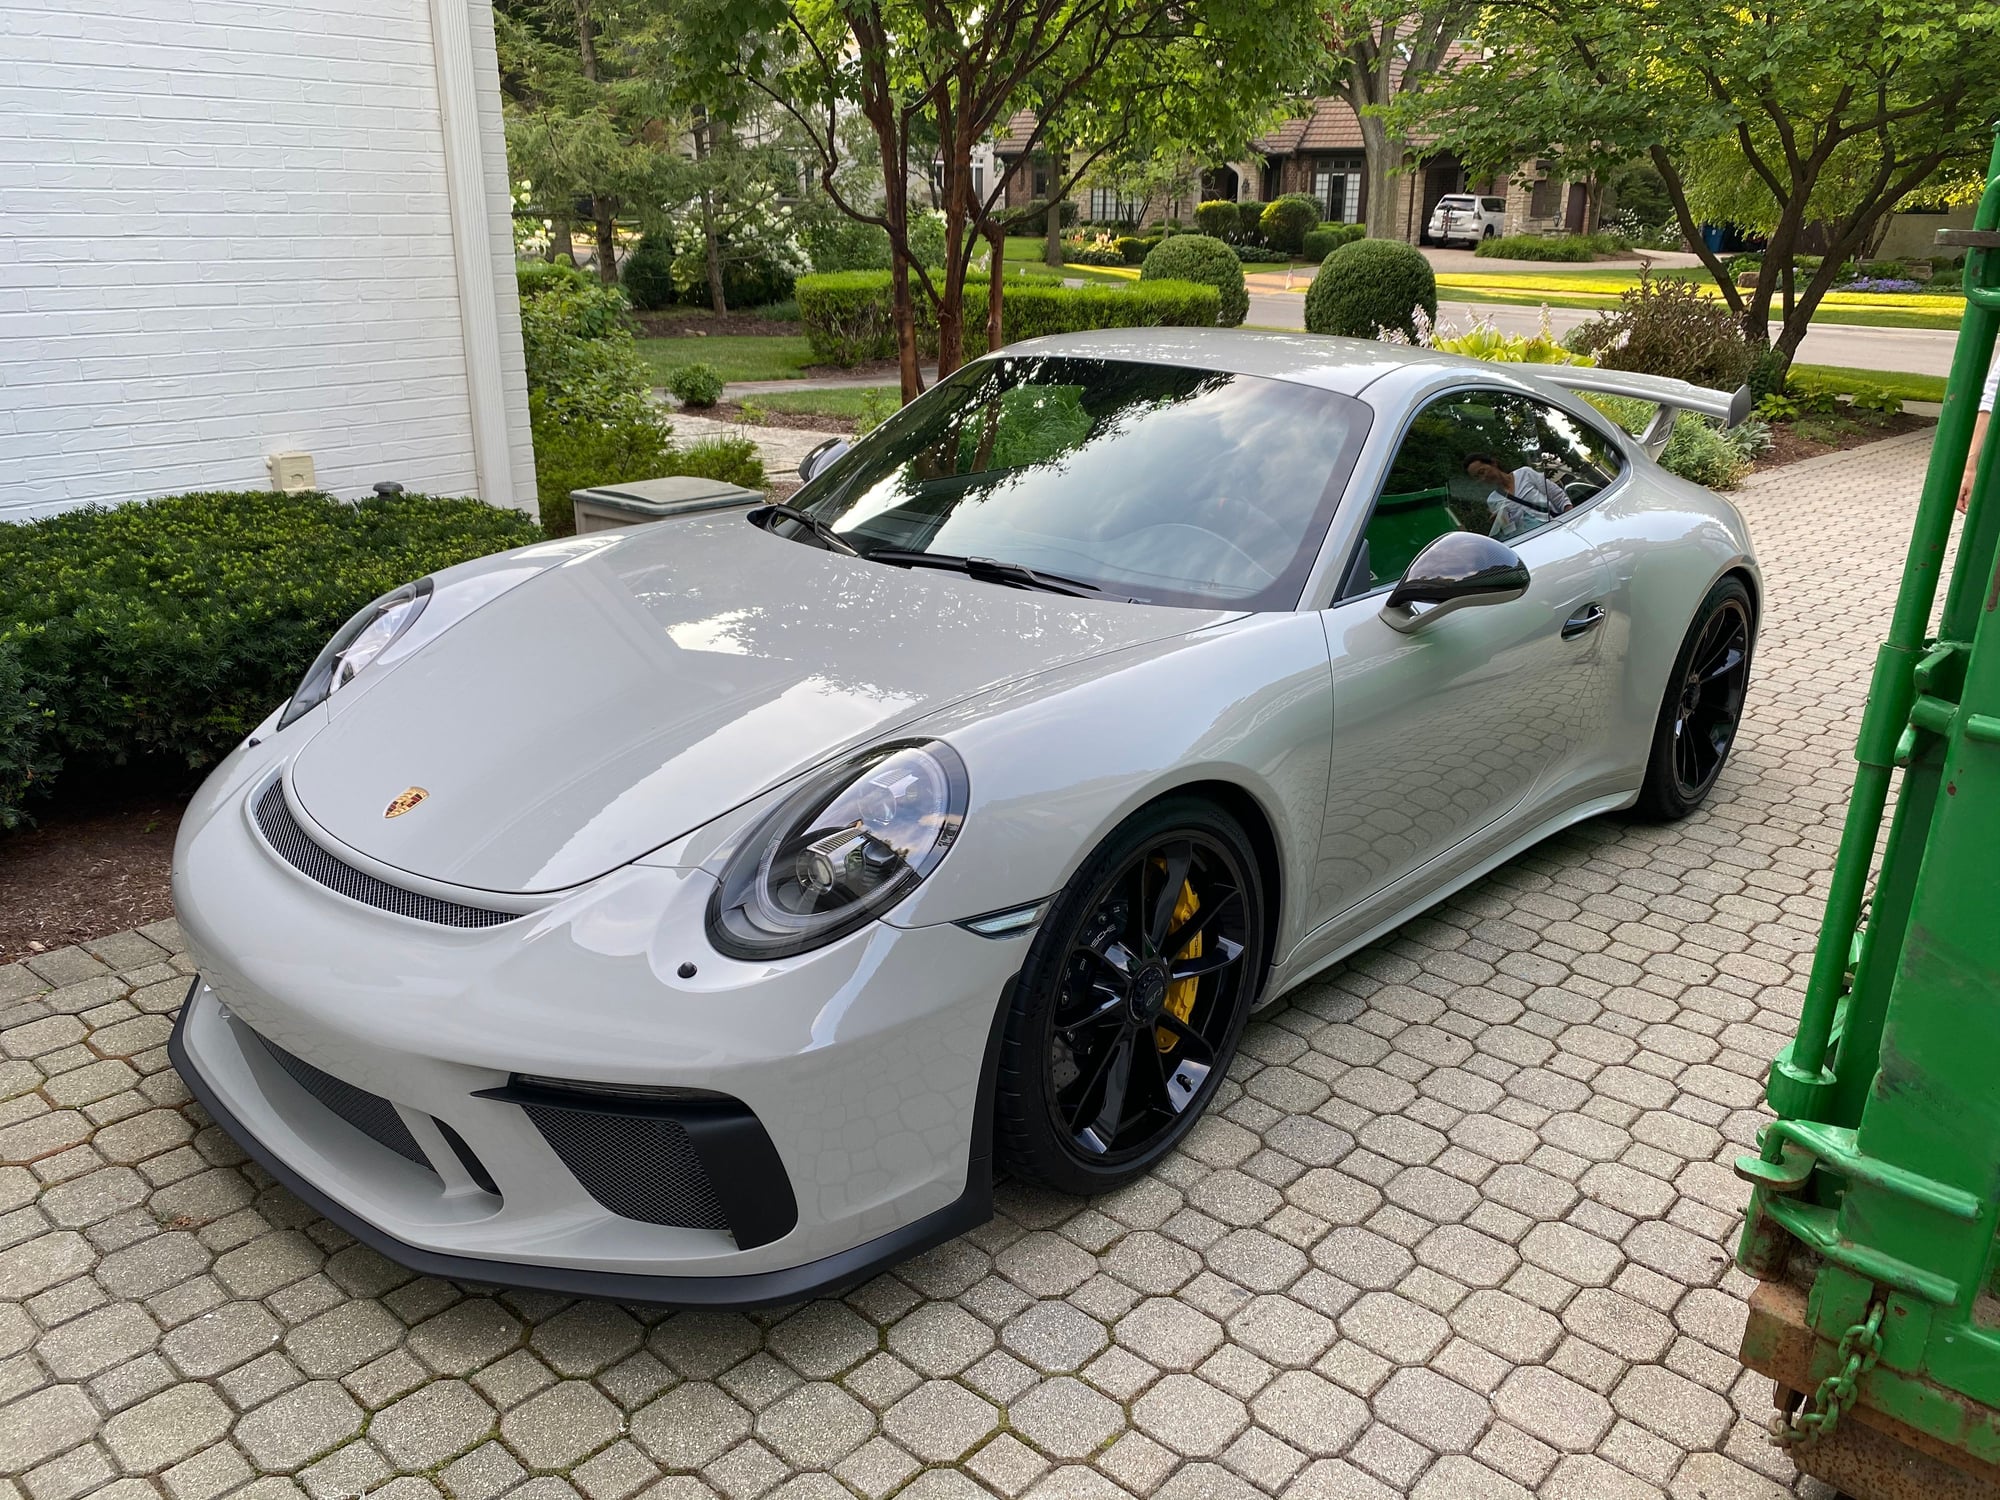 2018 Porsche GT3 - 2018 Porsche GT3 Chalk/6-spd/PCCB/LWB/FAL/CPO/XPEL- MSRP $192K - Used - VIN WP0AC2A90JS175679 - 6,000 Miles - 6 cyl - 2WD - Manual - Coupe - Beige - Hinsdale, IL 60521, United States